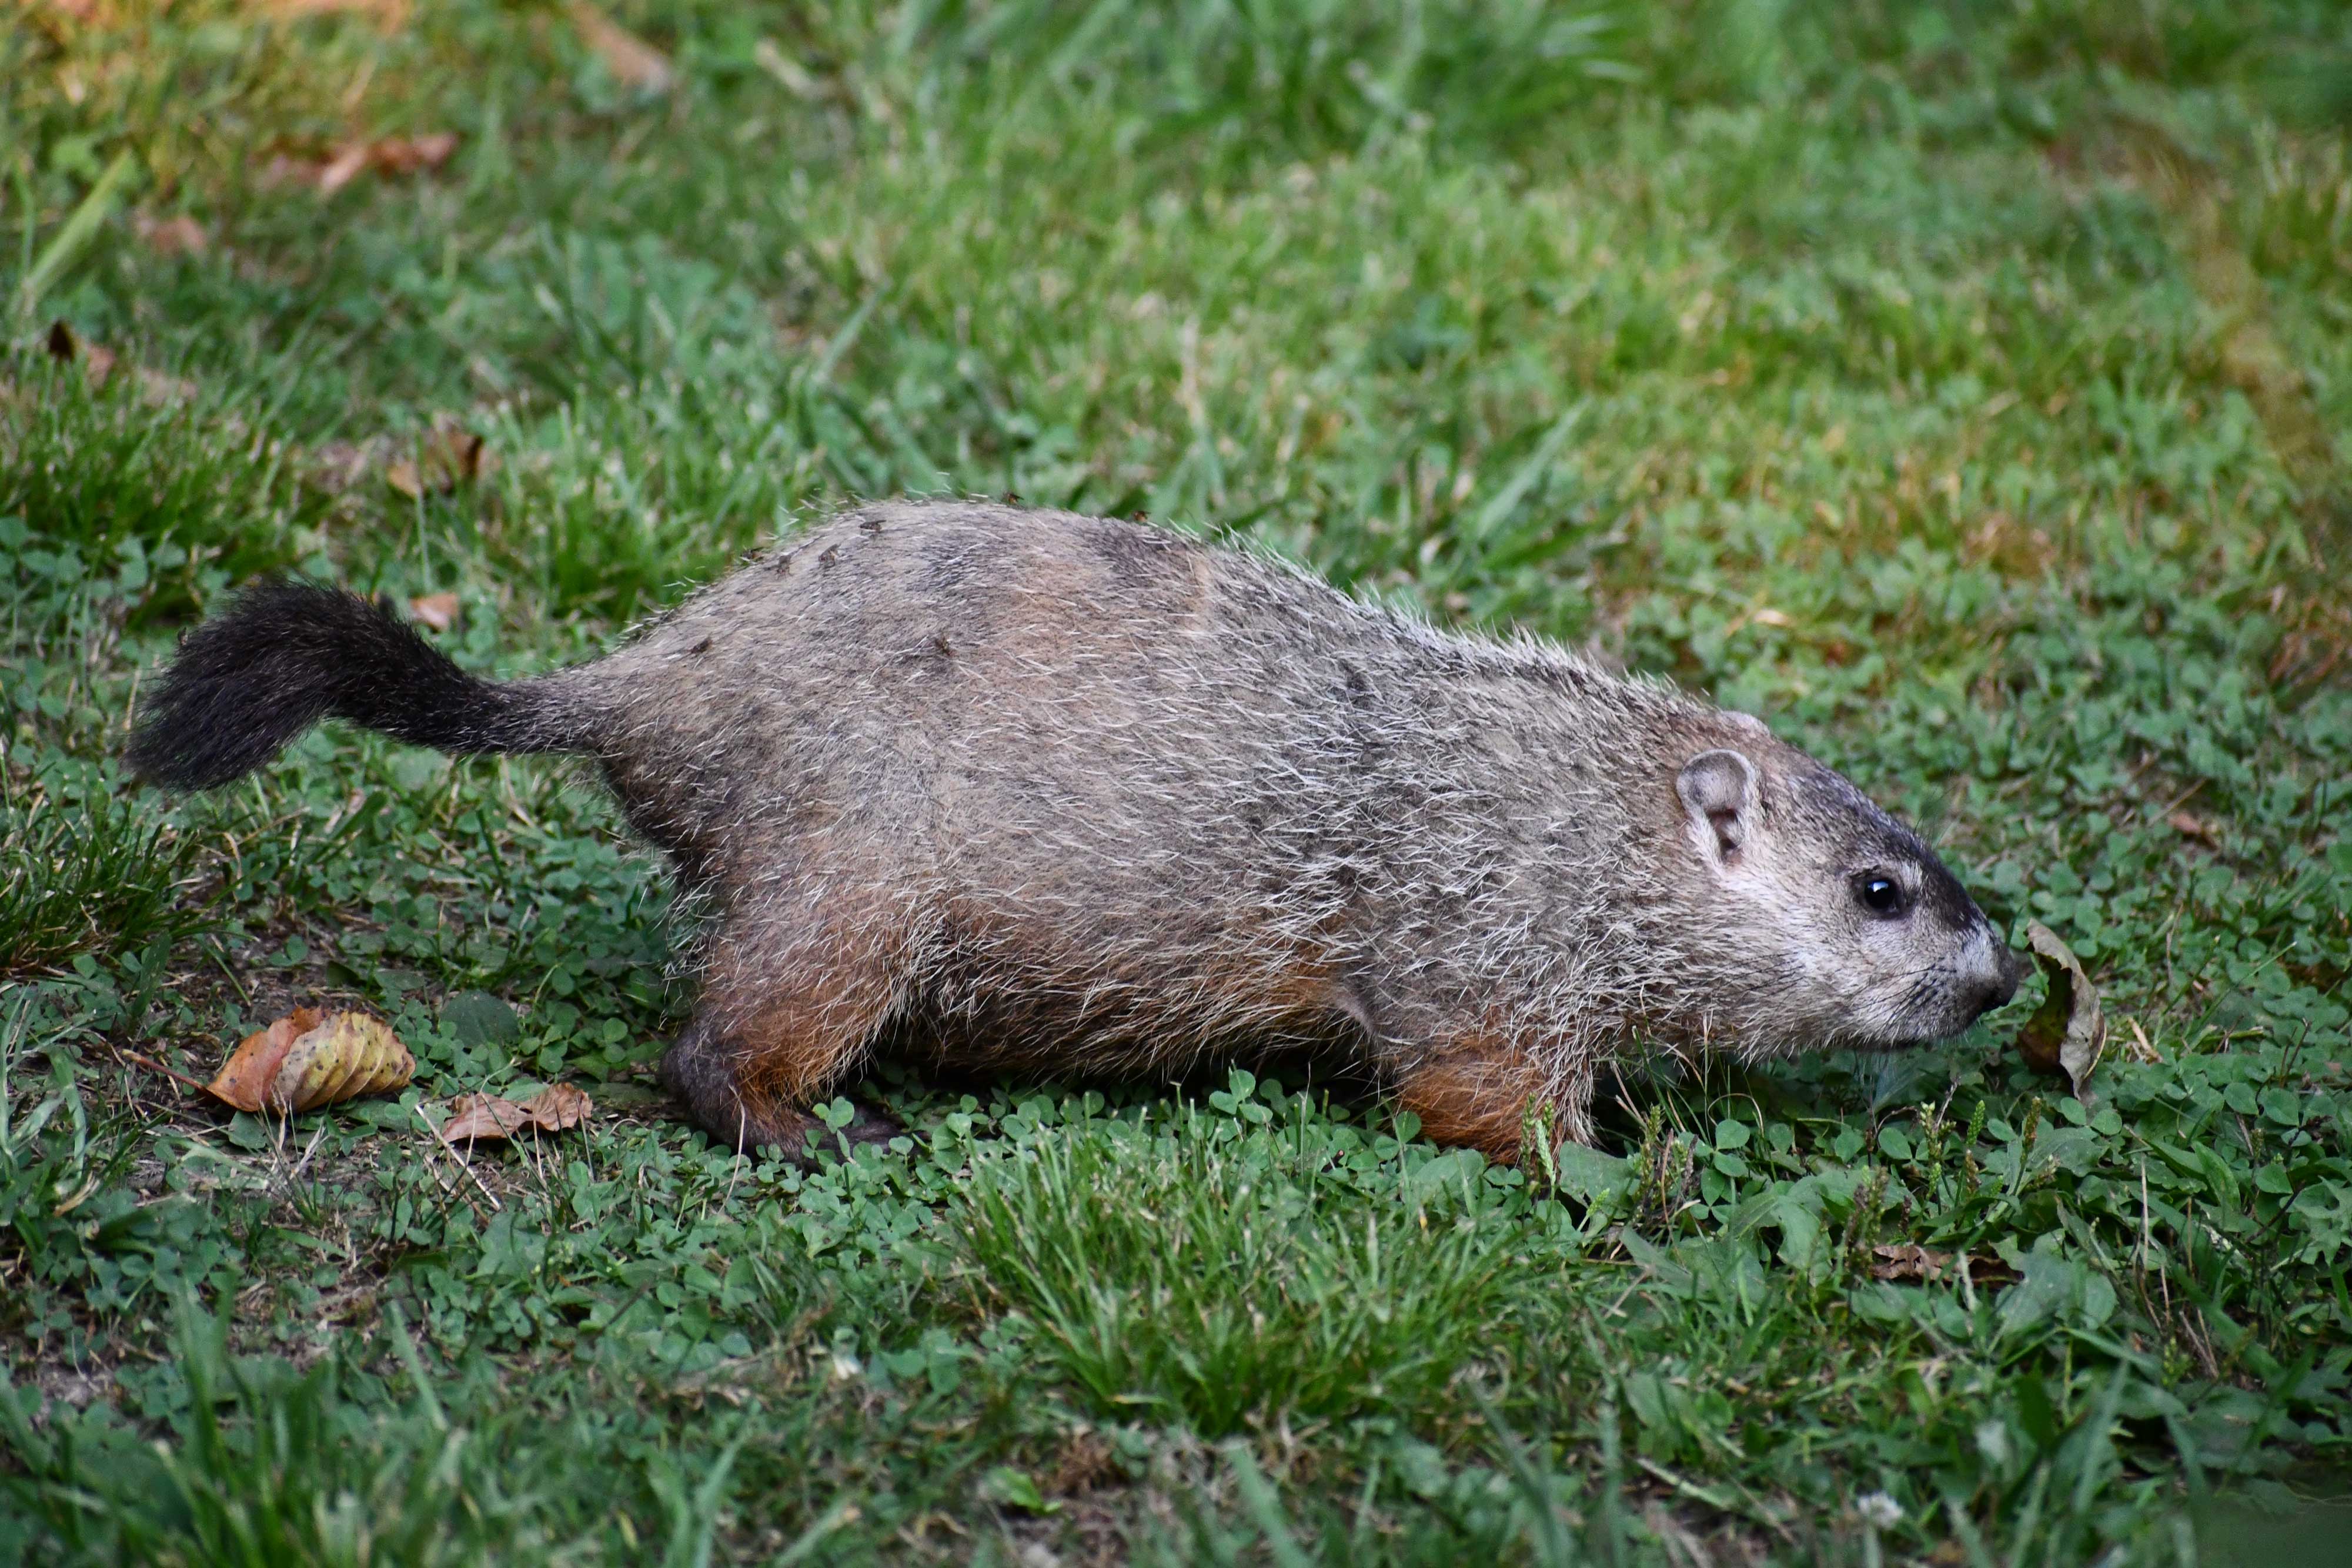 A groundhog in grass.